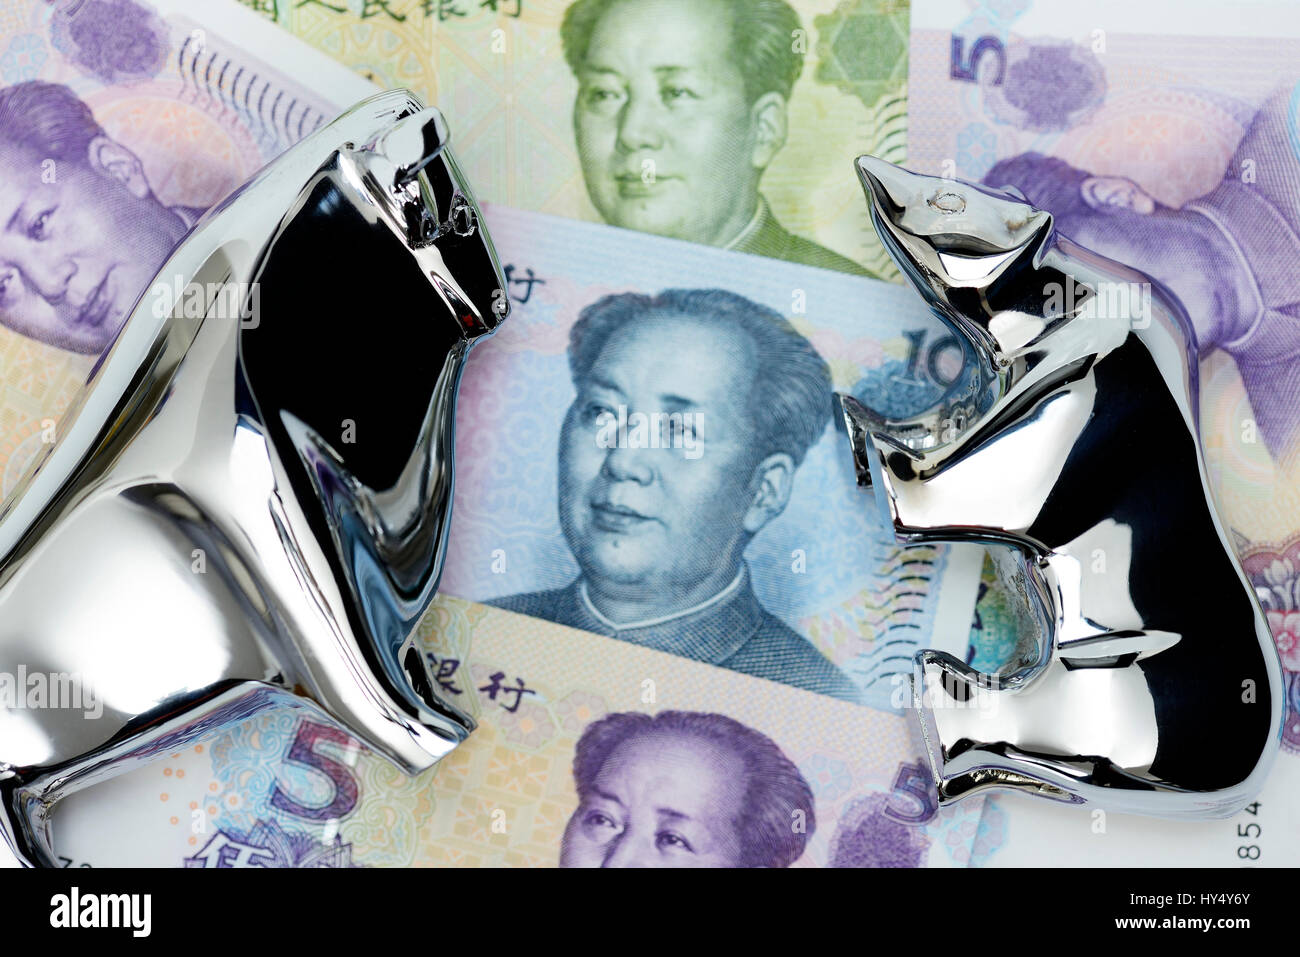 Stock market symbol bull and bear on Chinese bank notes, stock market fluctuations in China, Boersensymbol Bulle und Baer auf chinesischen Geldscheine Stock Photo